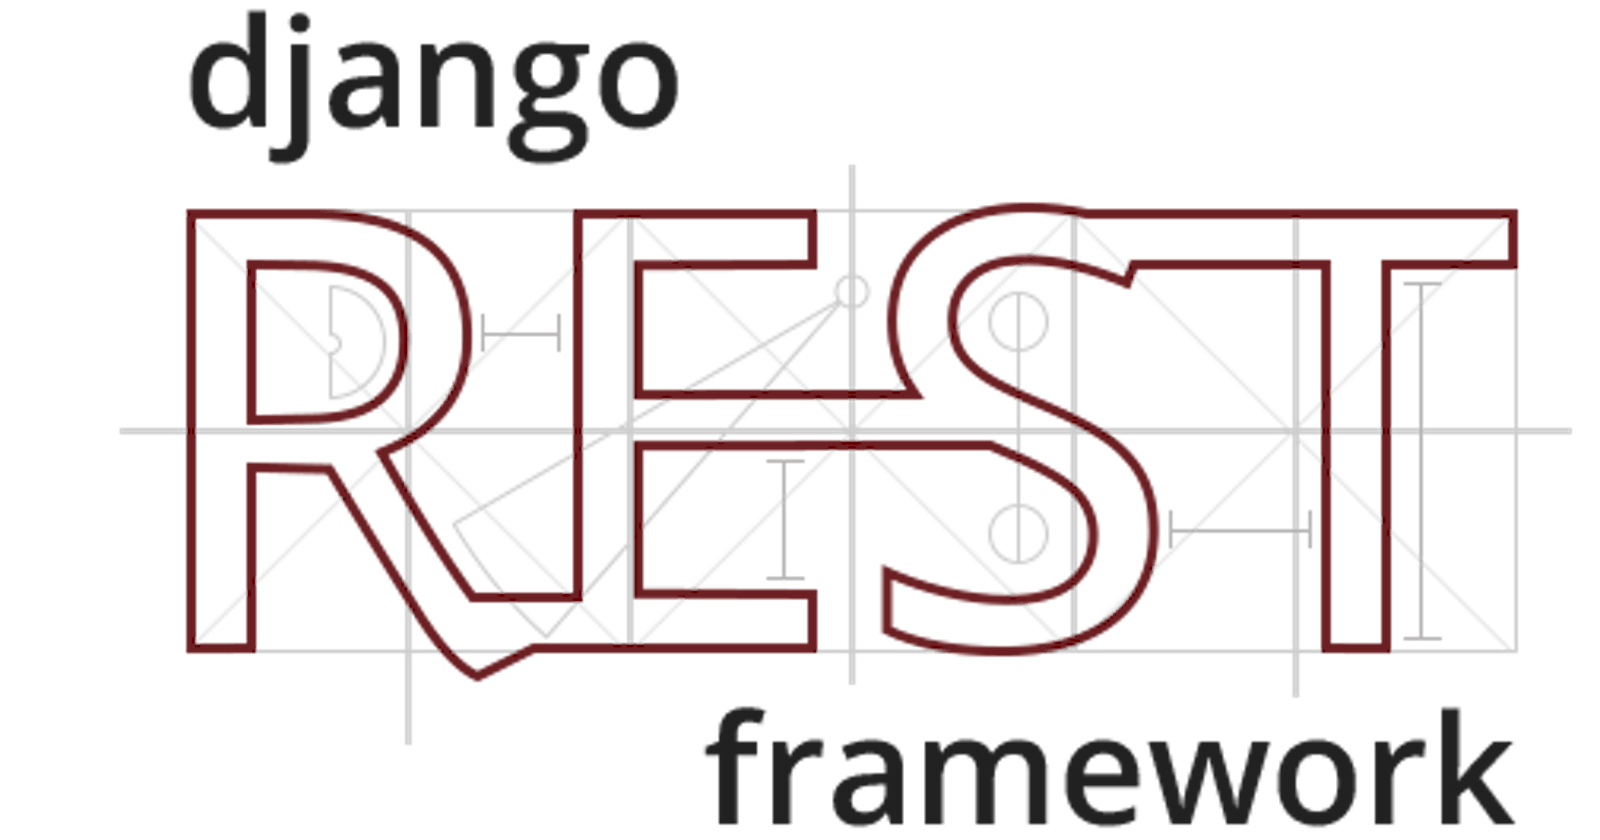 Building REST API with Django (Part 1)